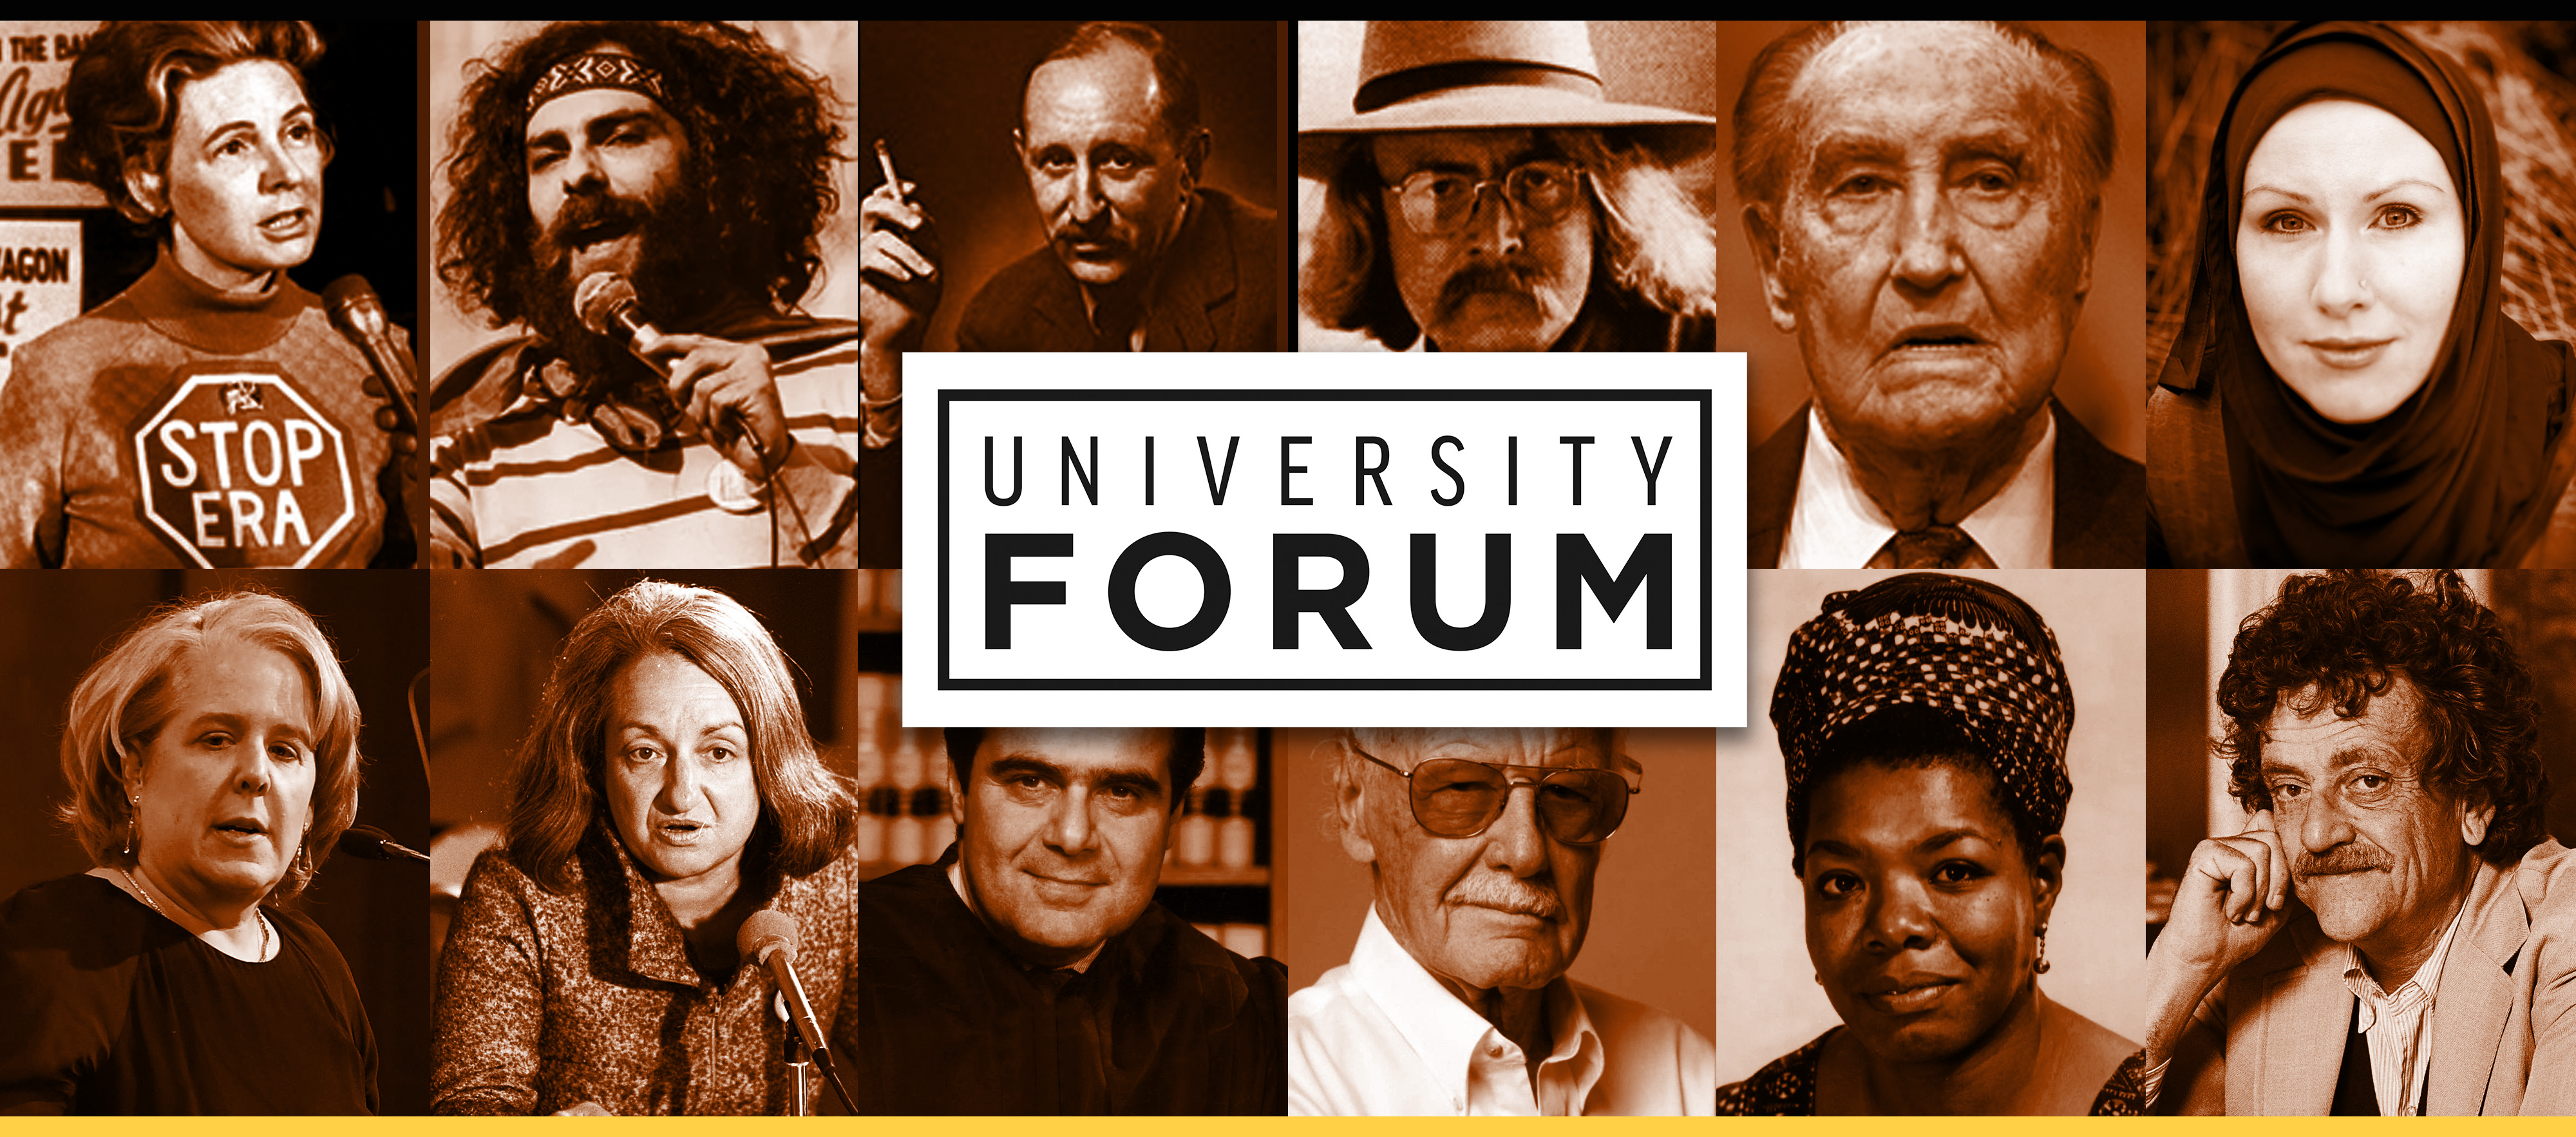 Seeing Society through University Forum  Professor John Winters